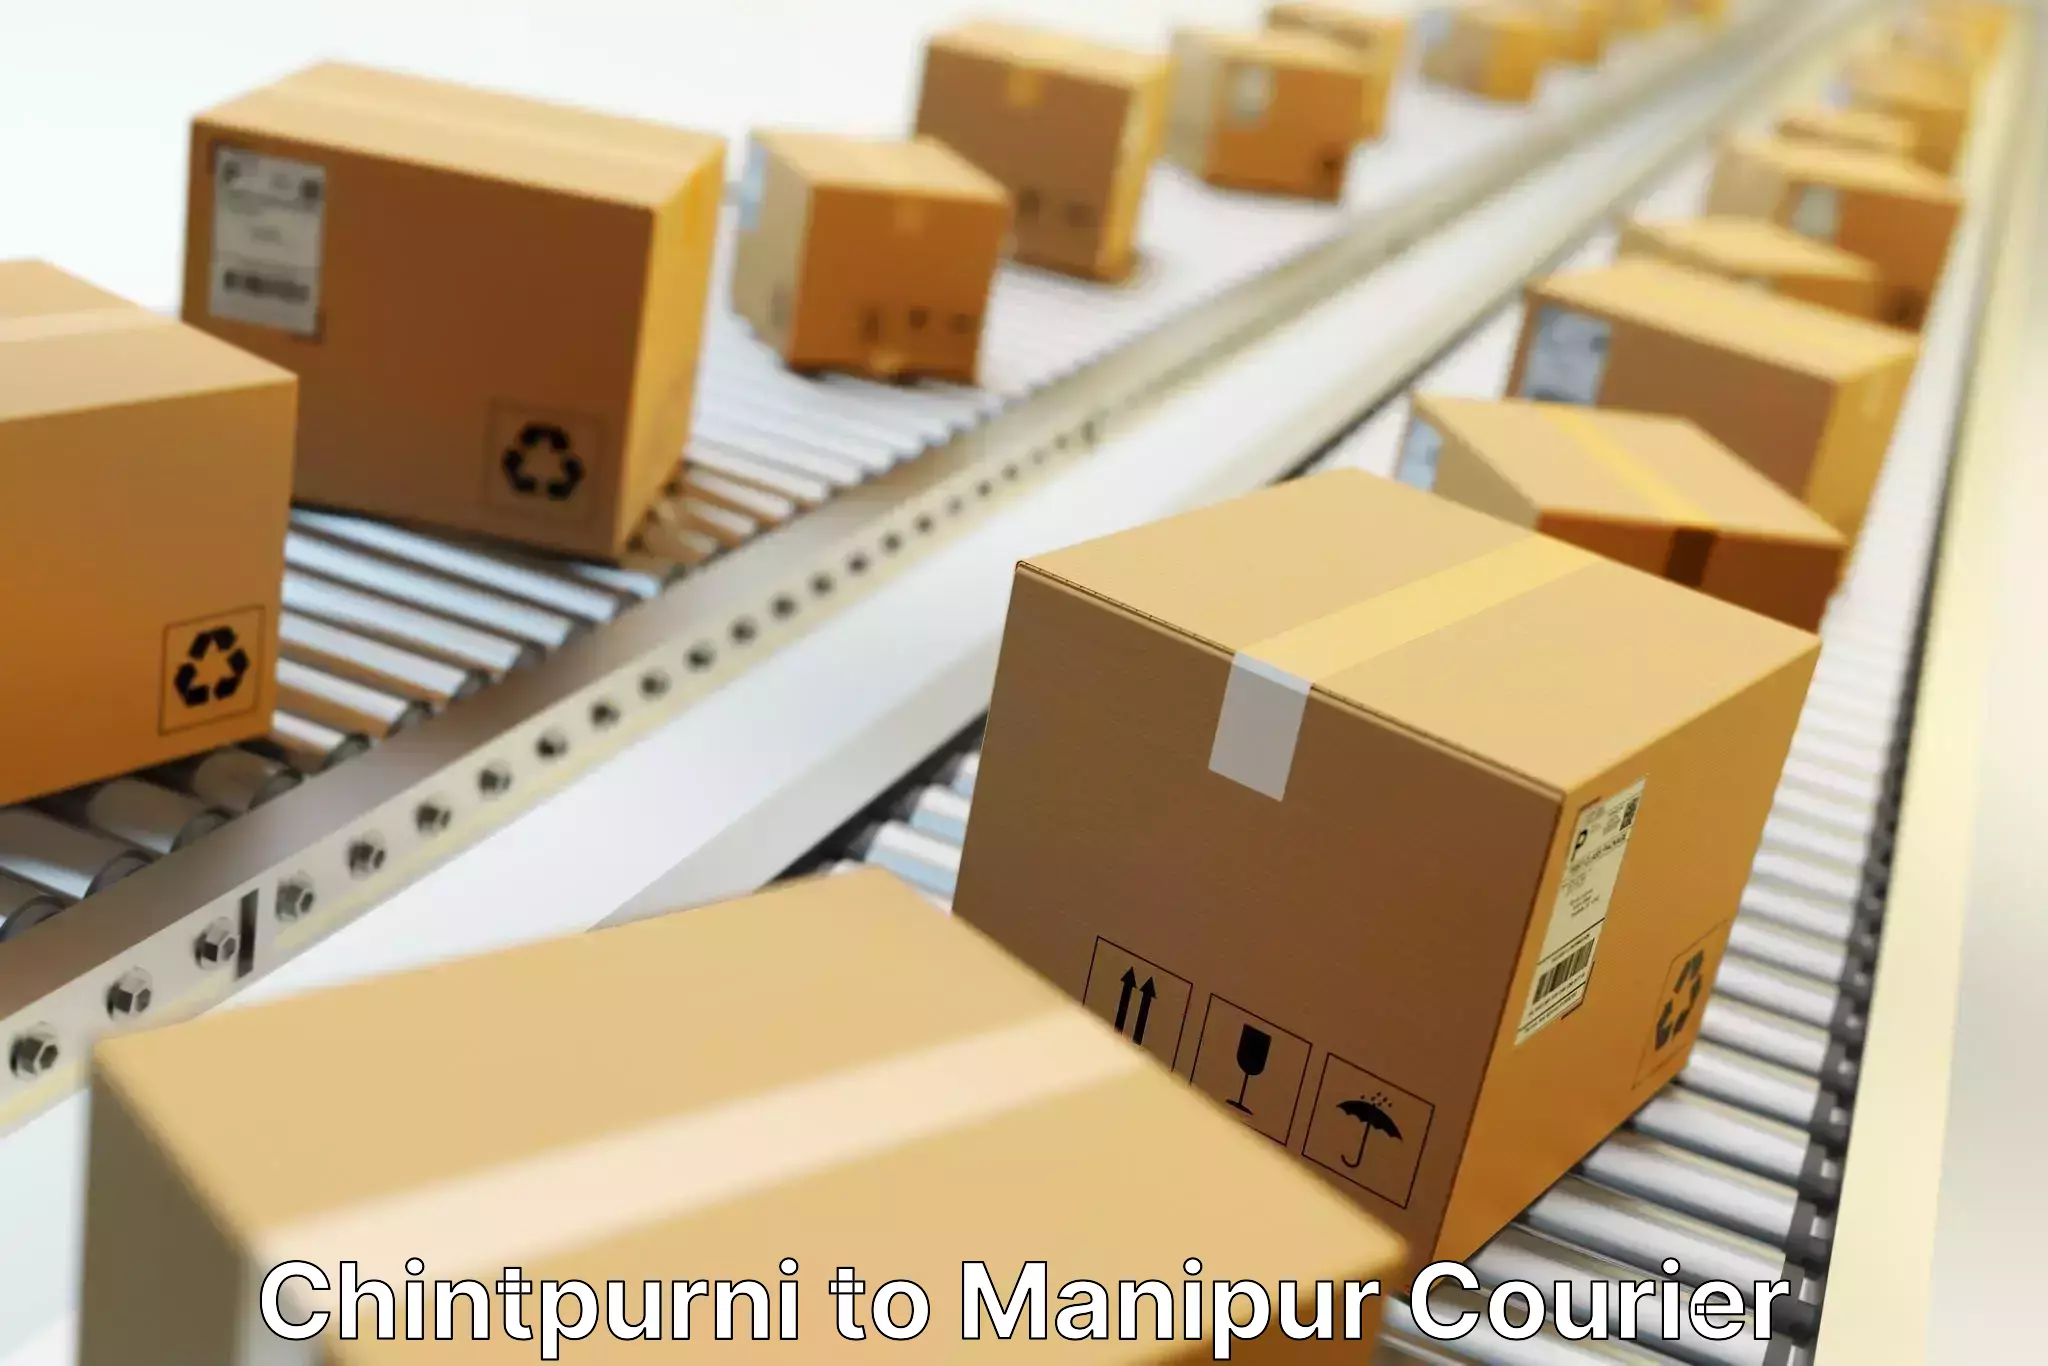 Modern courier technology Chintpurni to Manipur